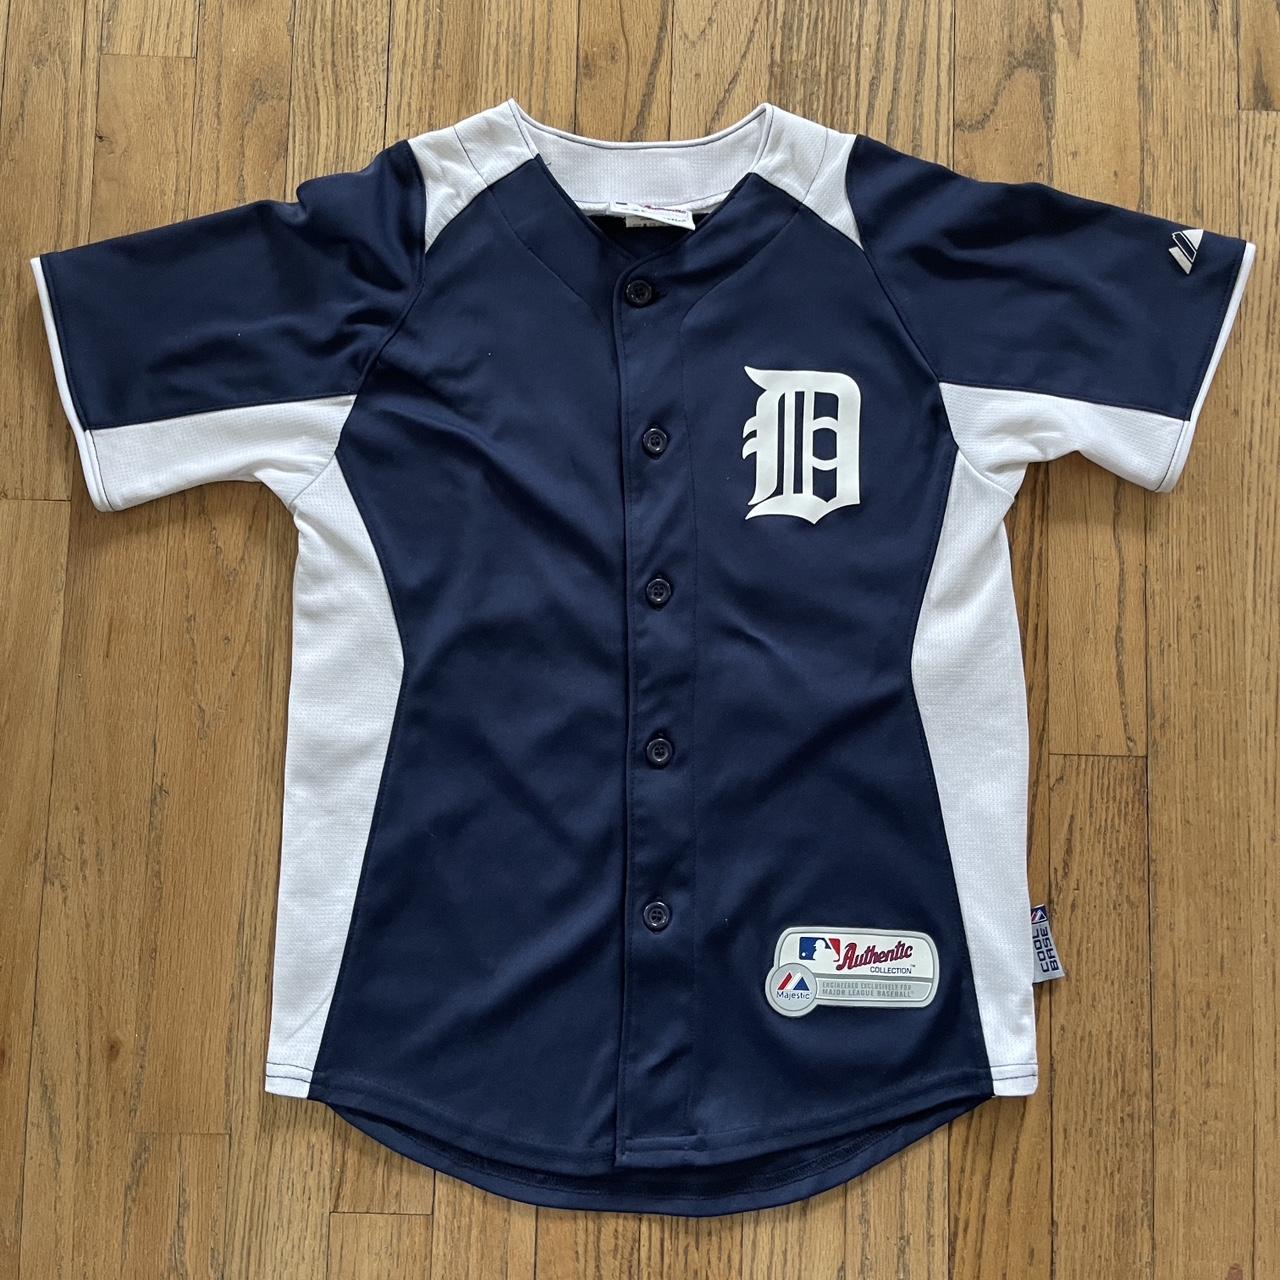 Vintage MLB Detroit Tigers Baseball Jersey by Majestic Genuine 